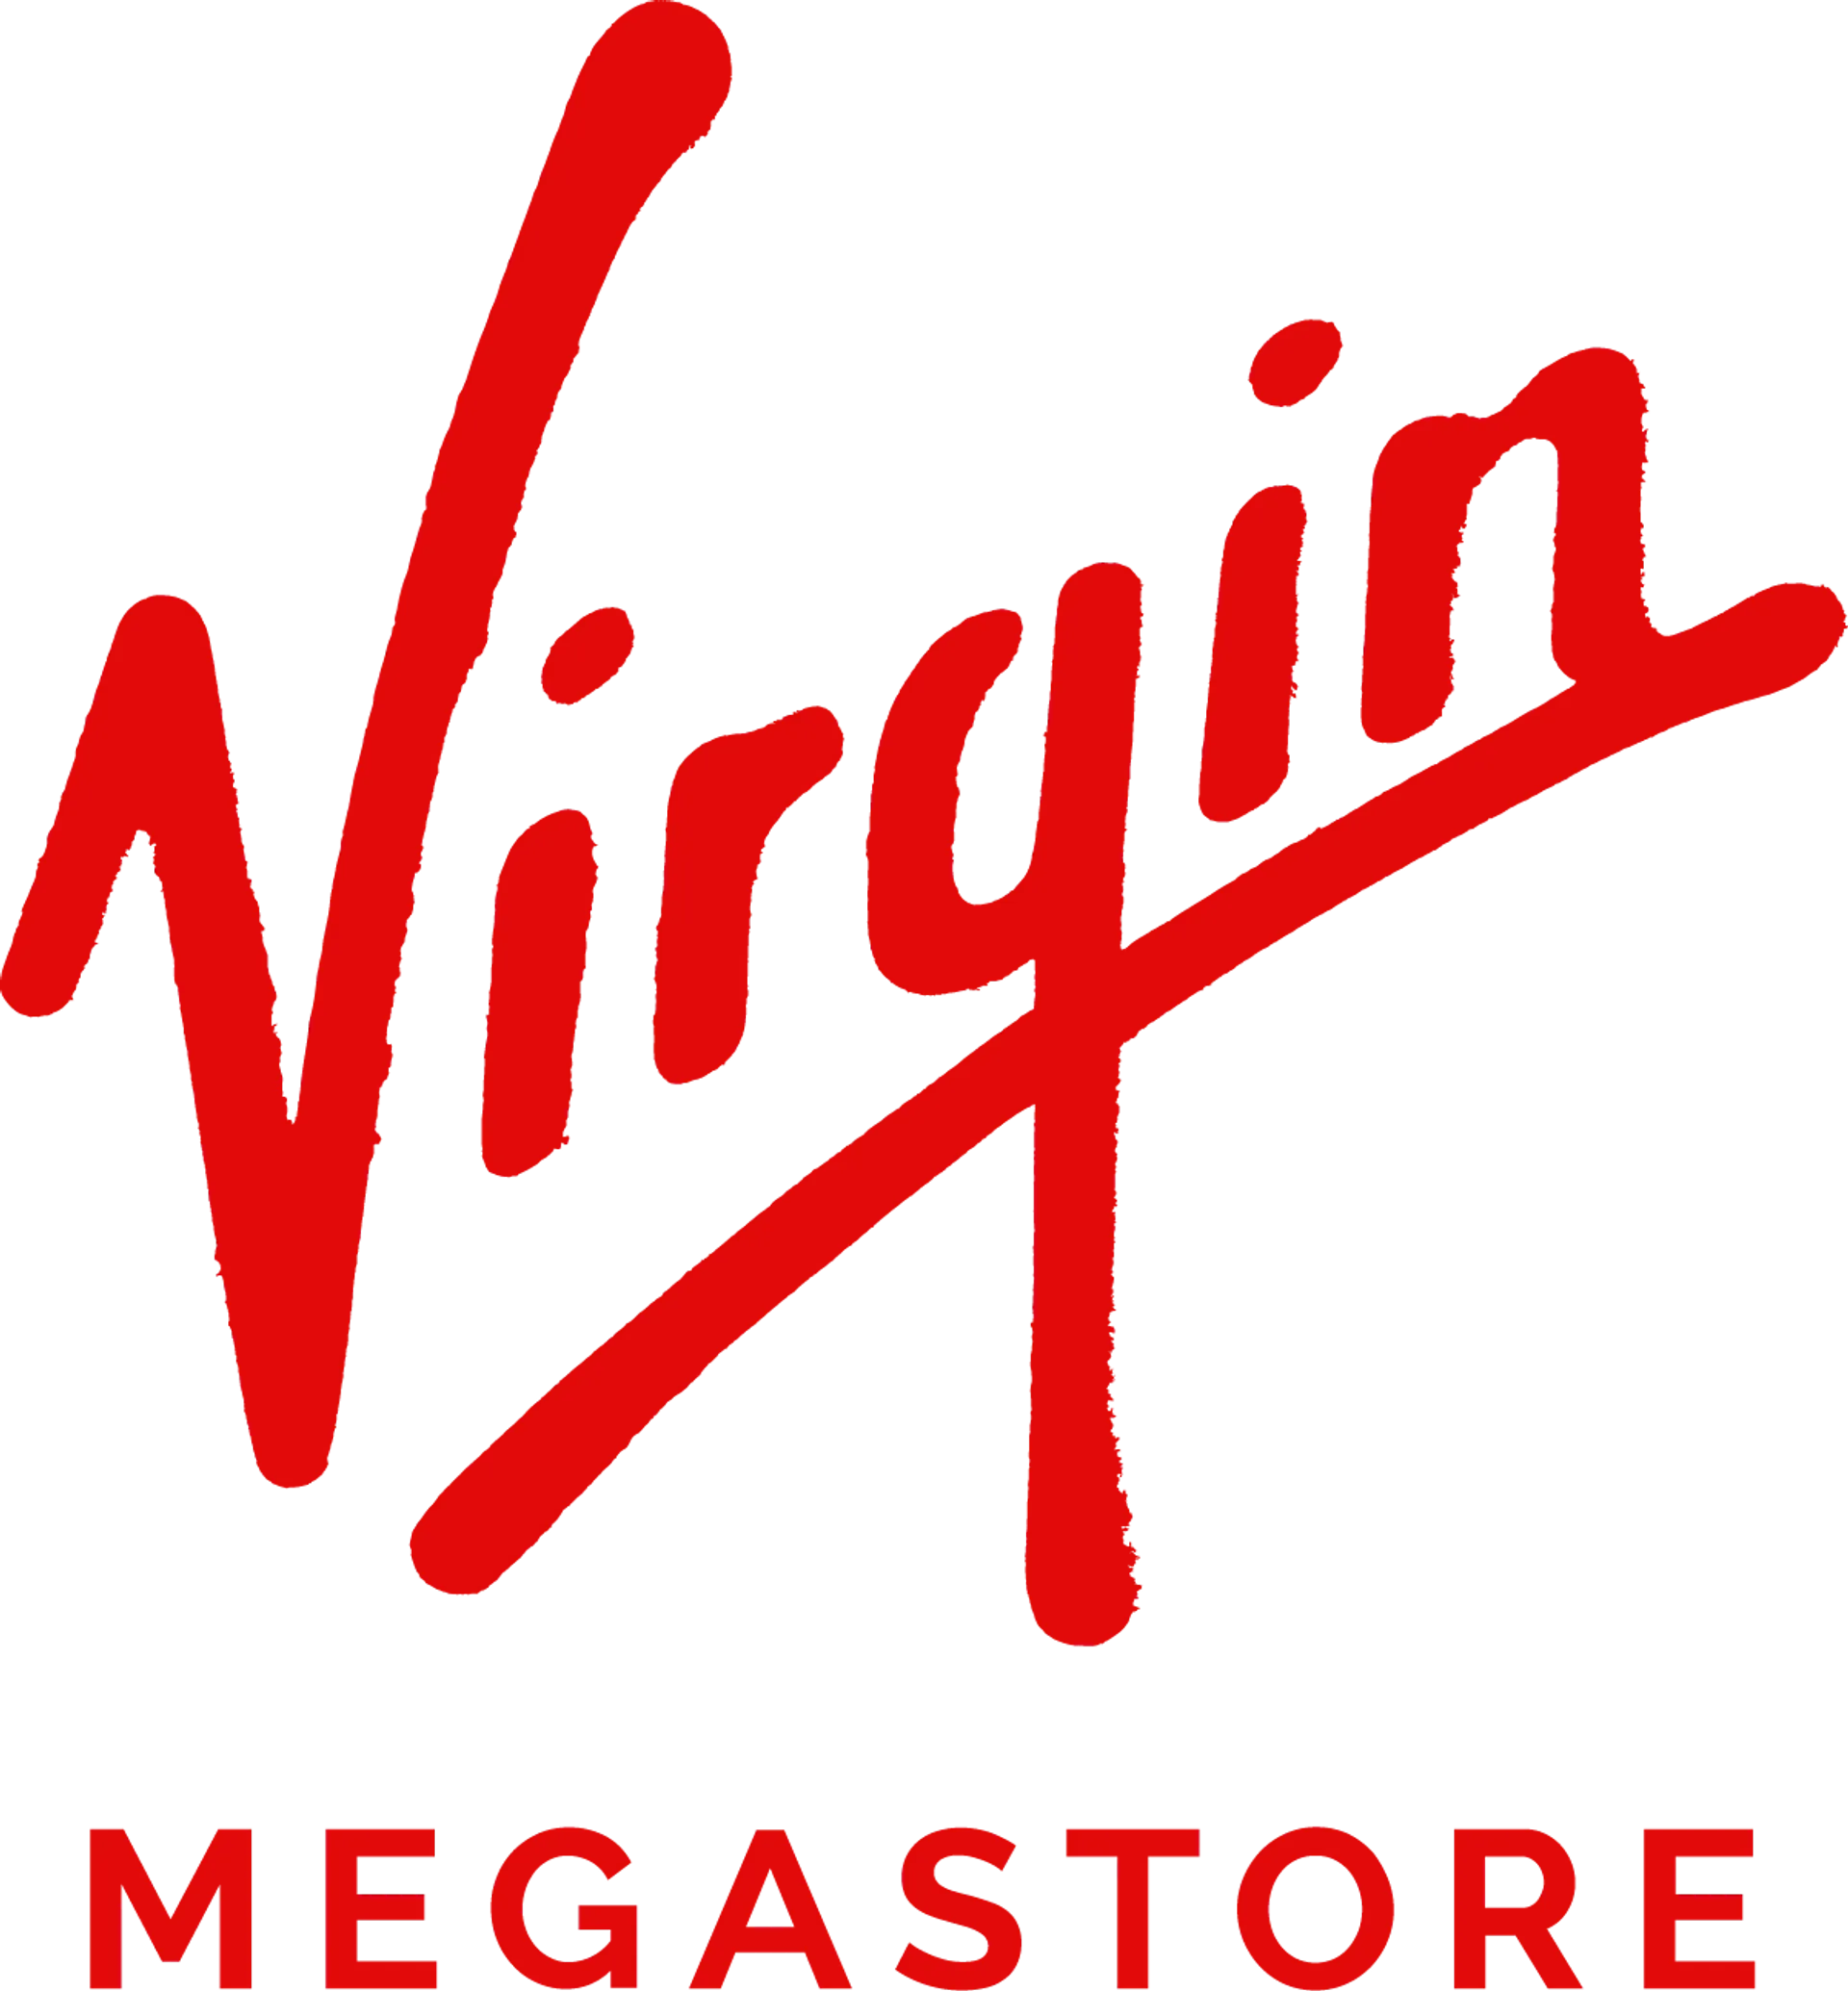 VIRGIN MEGASTORE logo. Current weekly ad